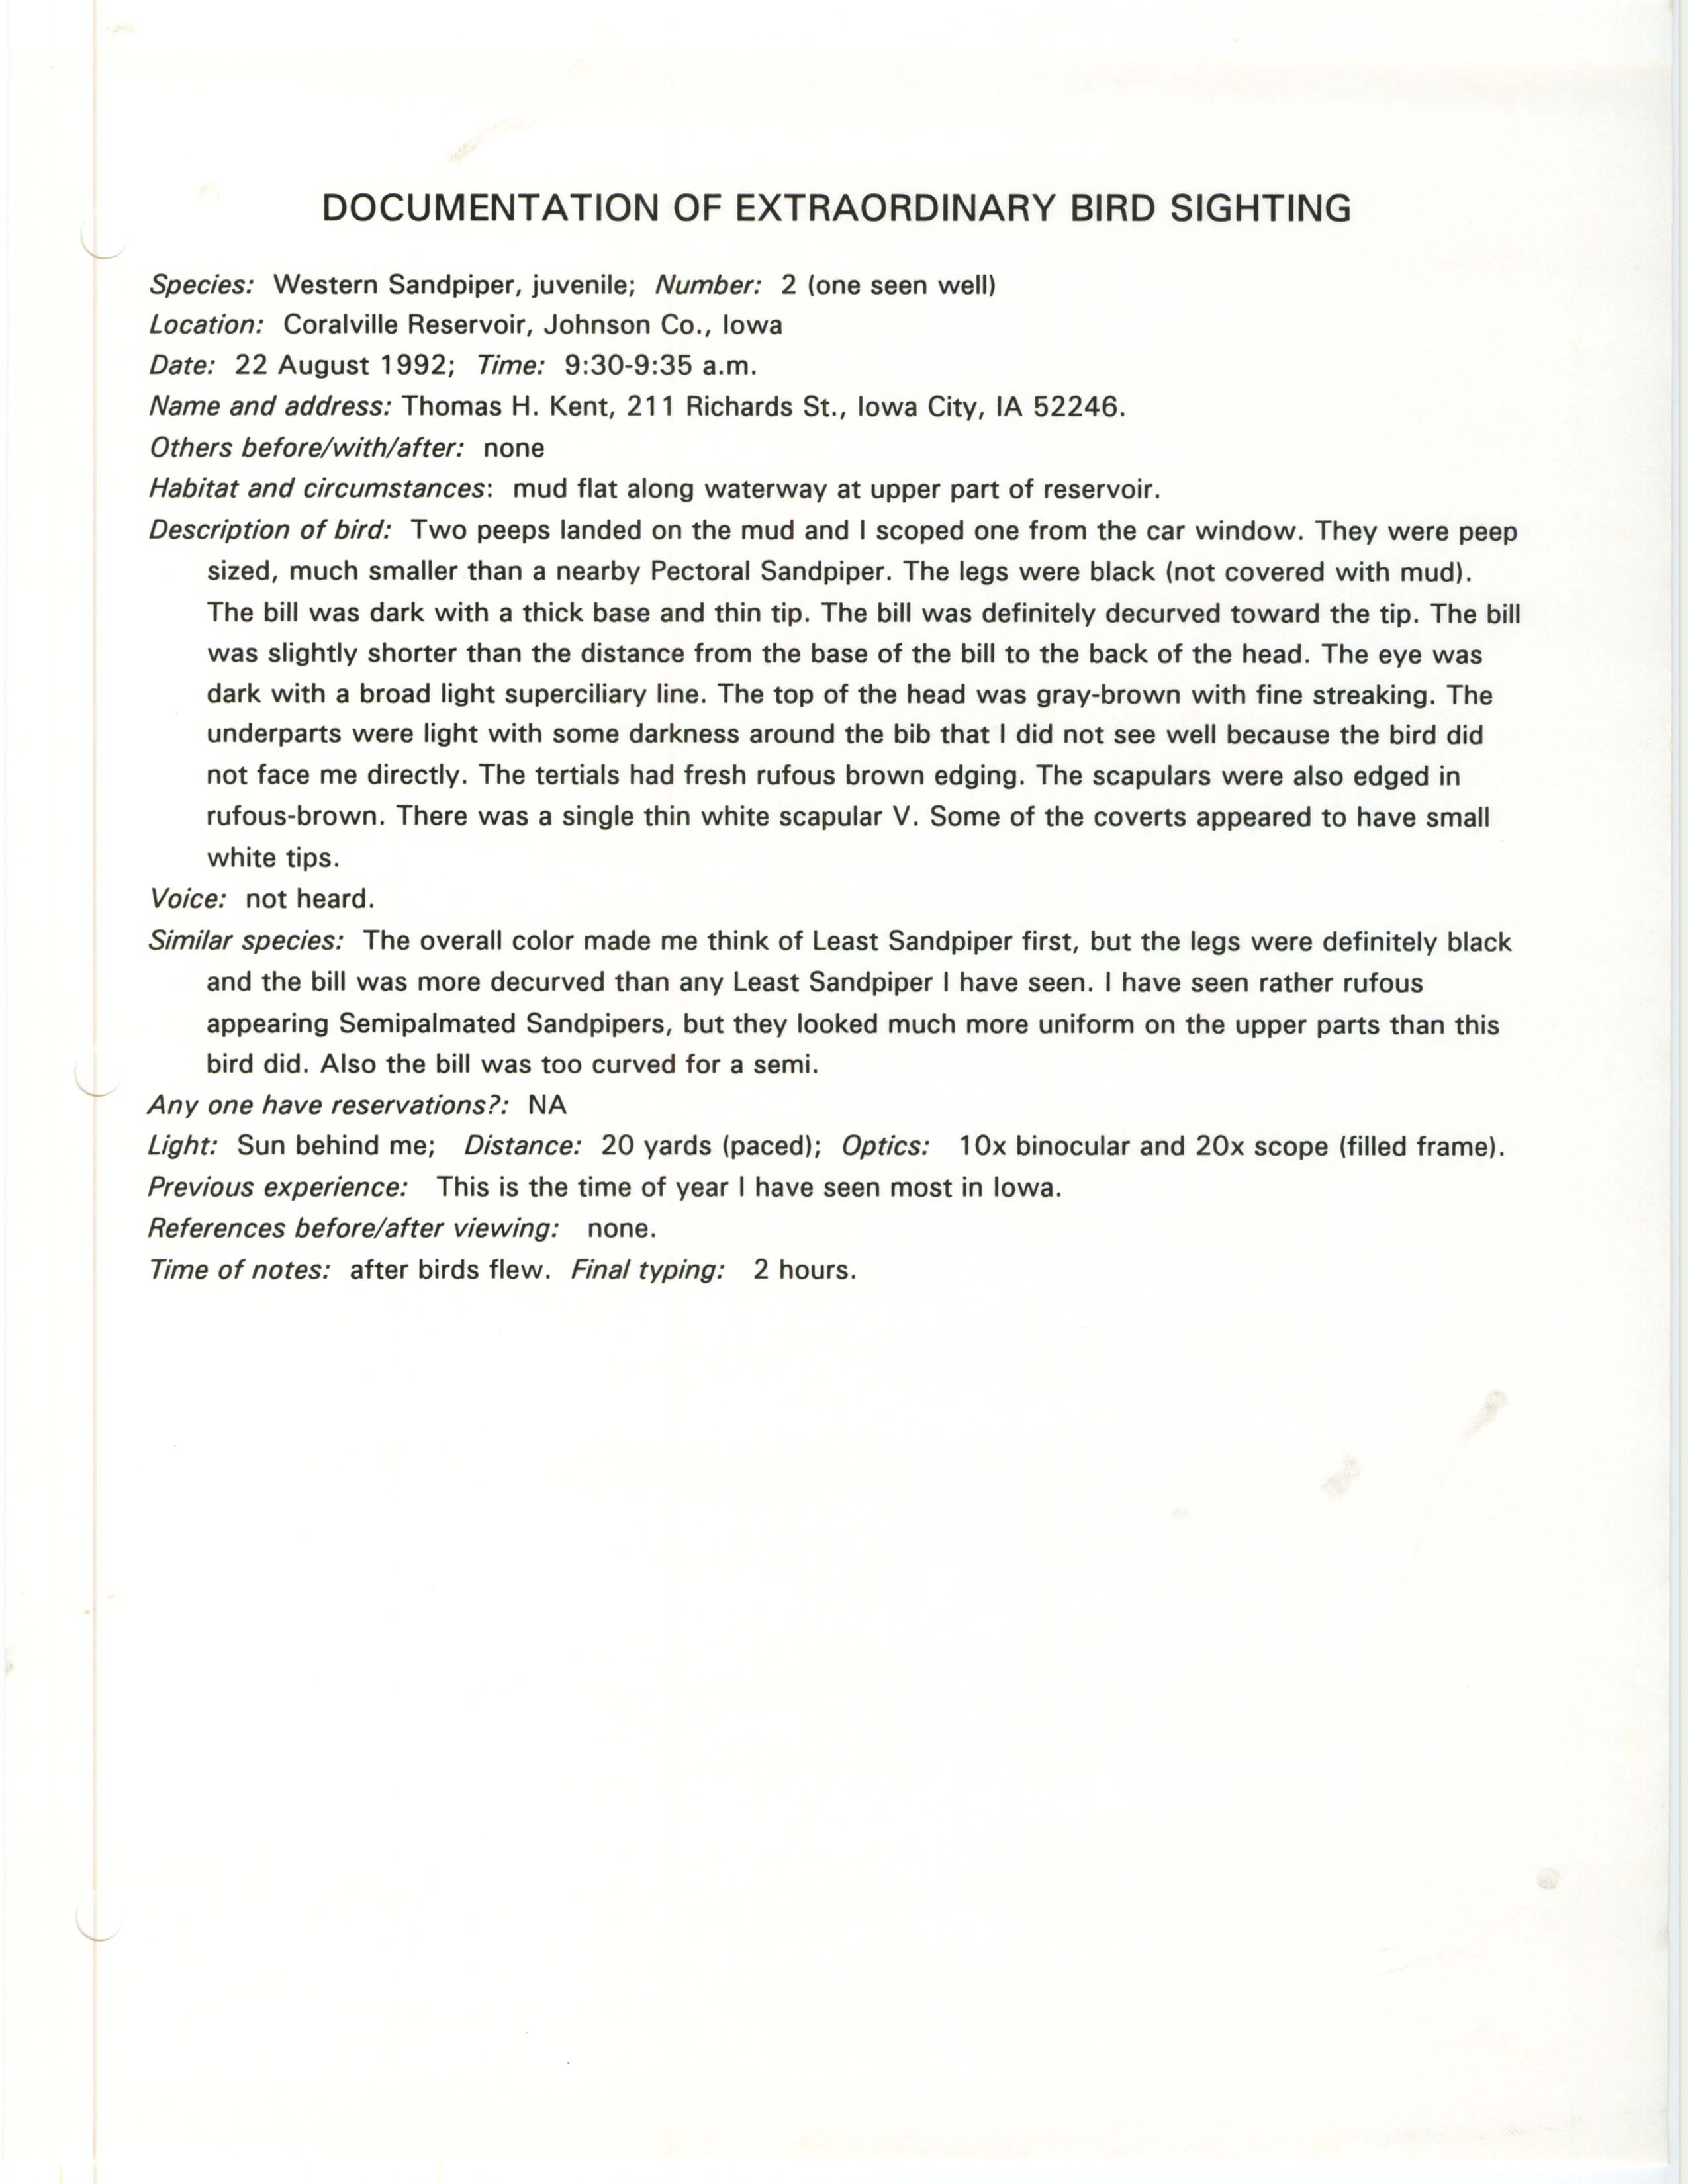 Rare bird documentation form for Western Sandpiper at Coralville Reservoir, 1992